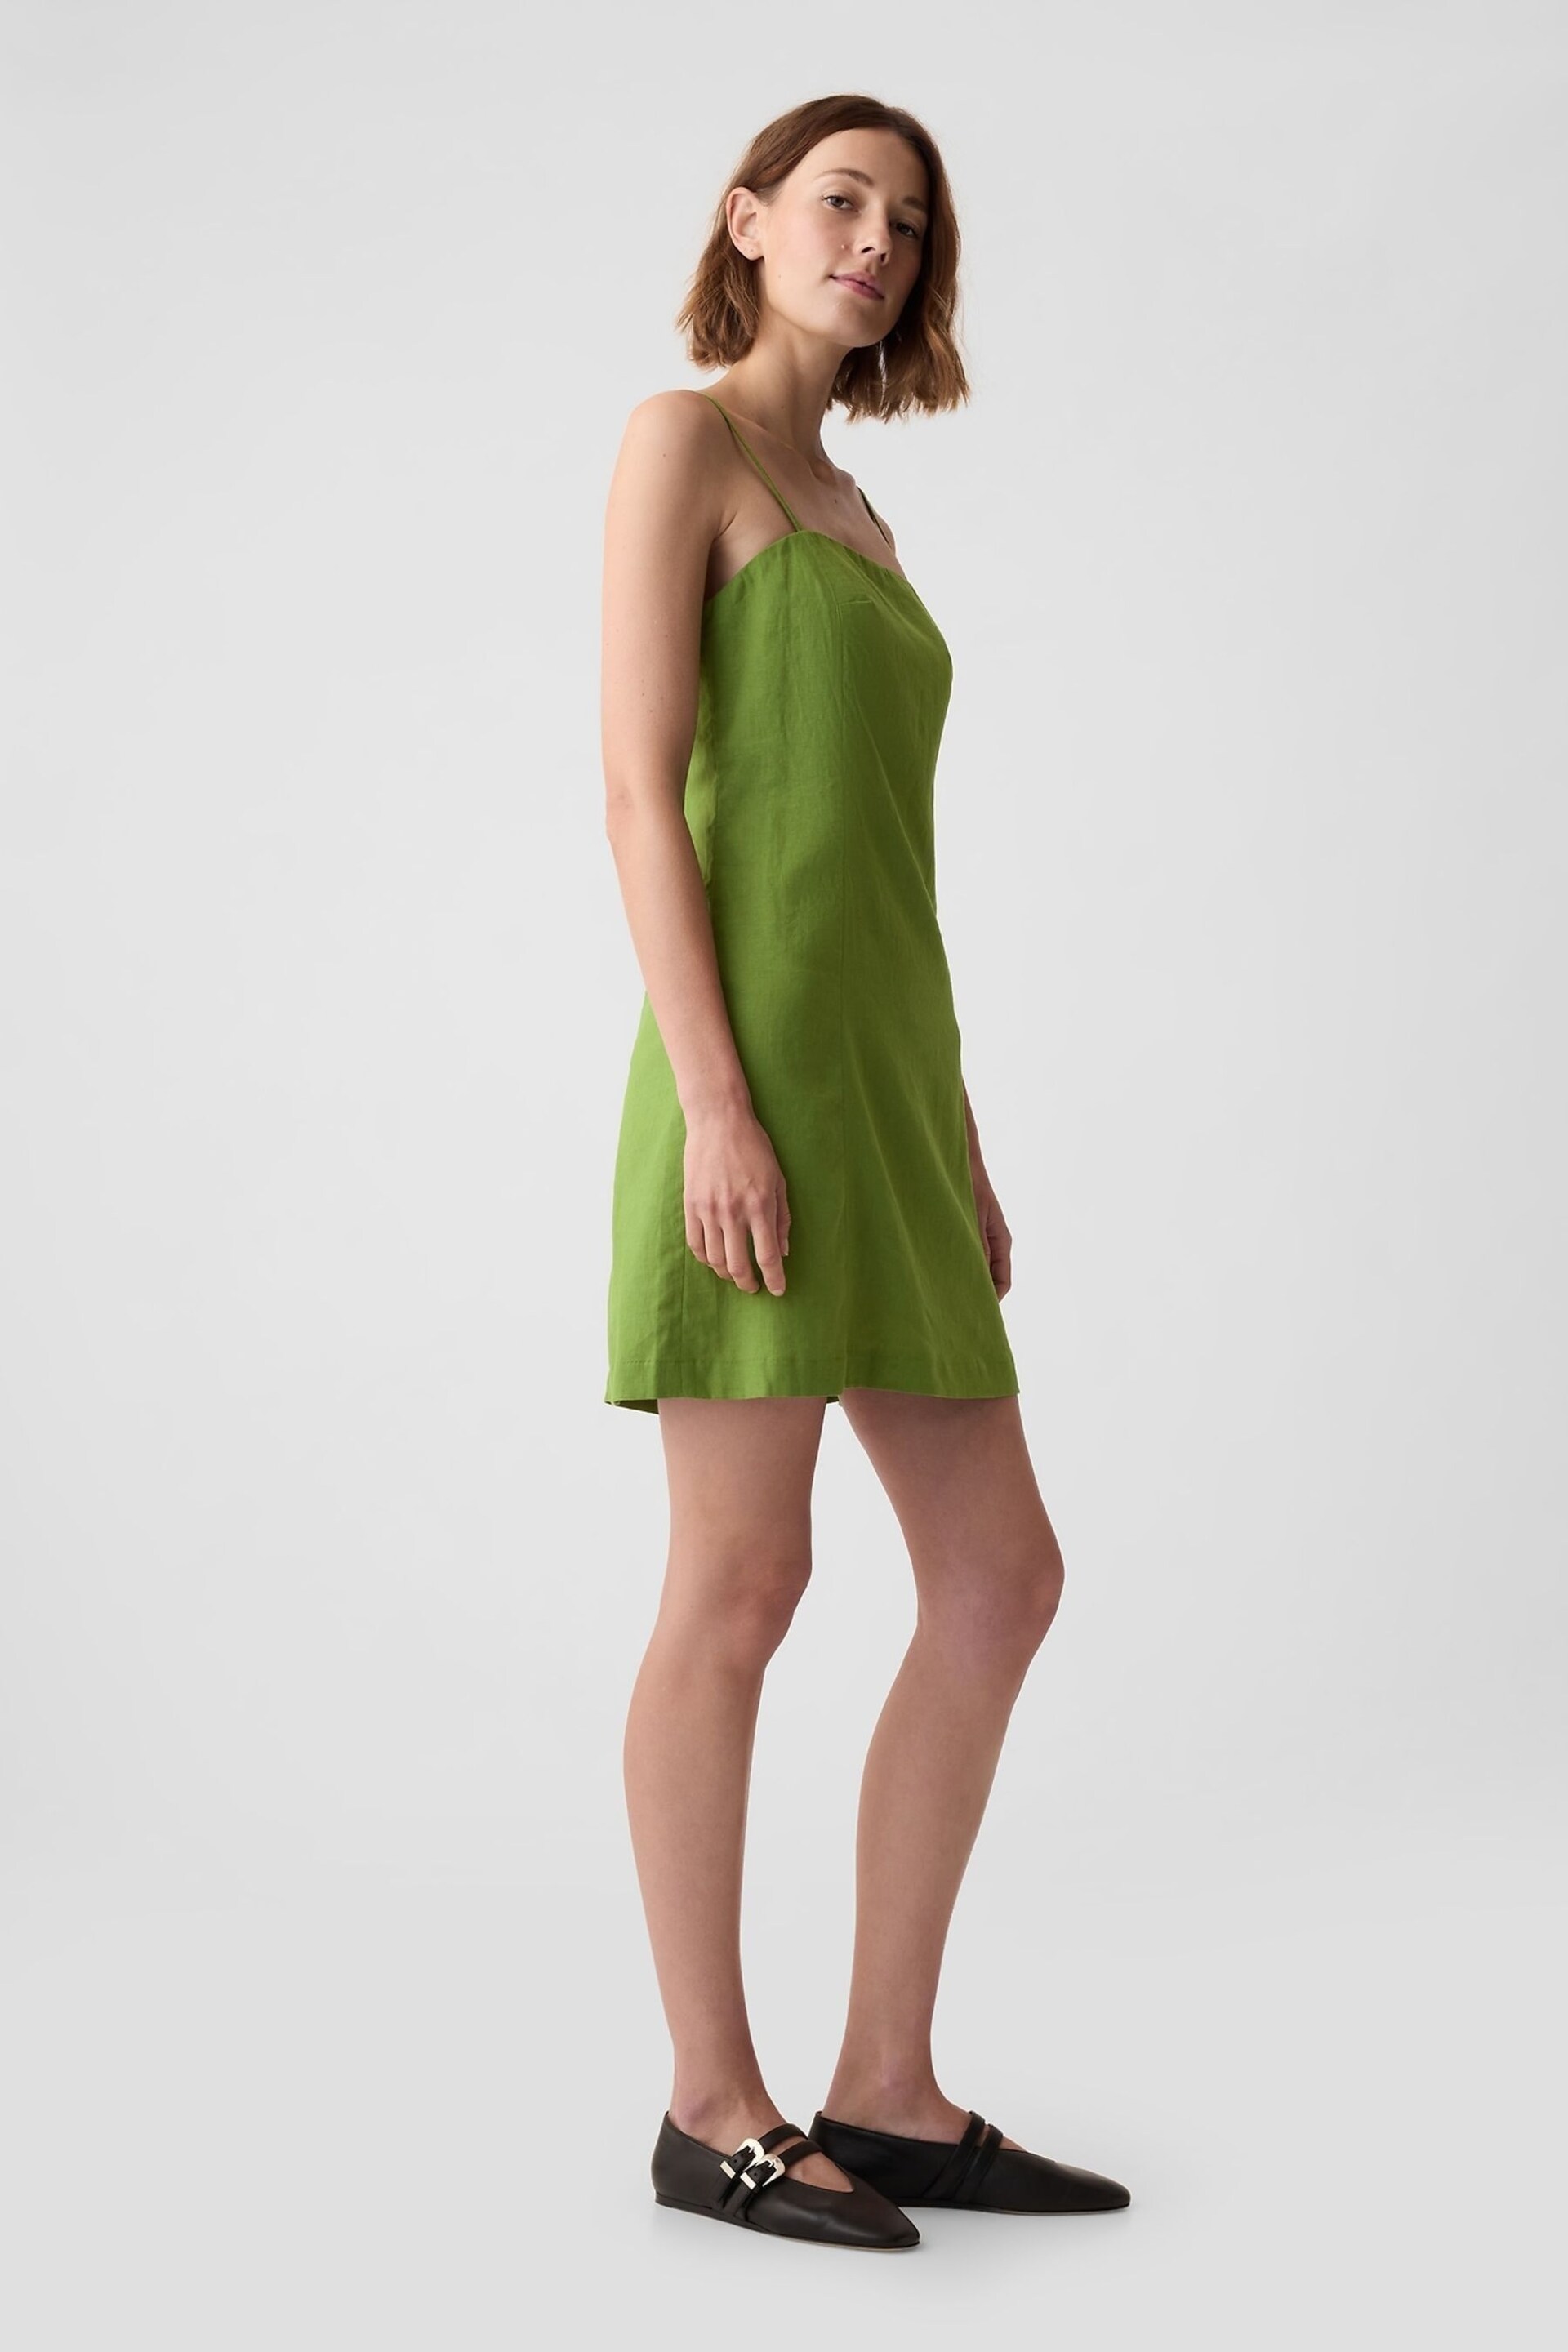 Gap Green Linen-Blend Mini Dress - Image 6 of 6